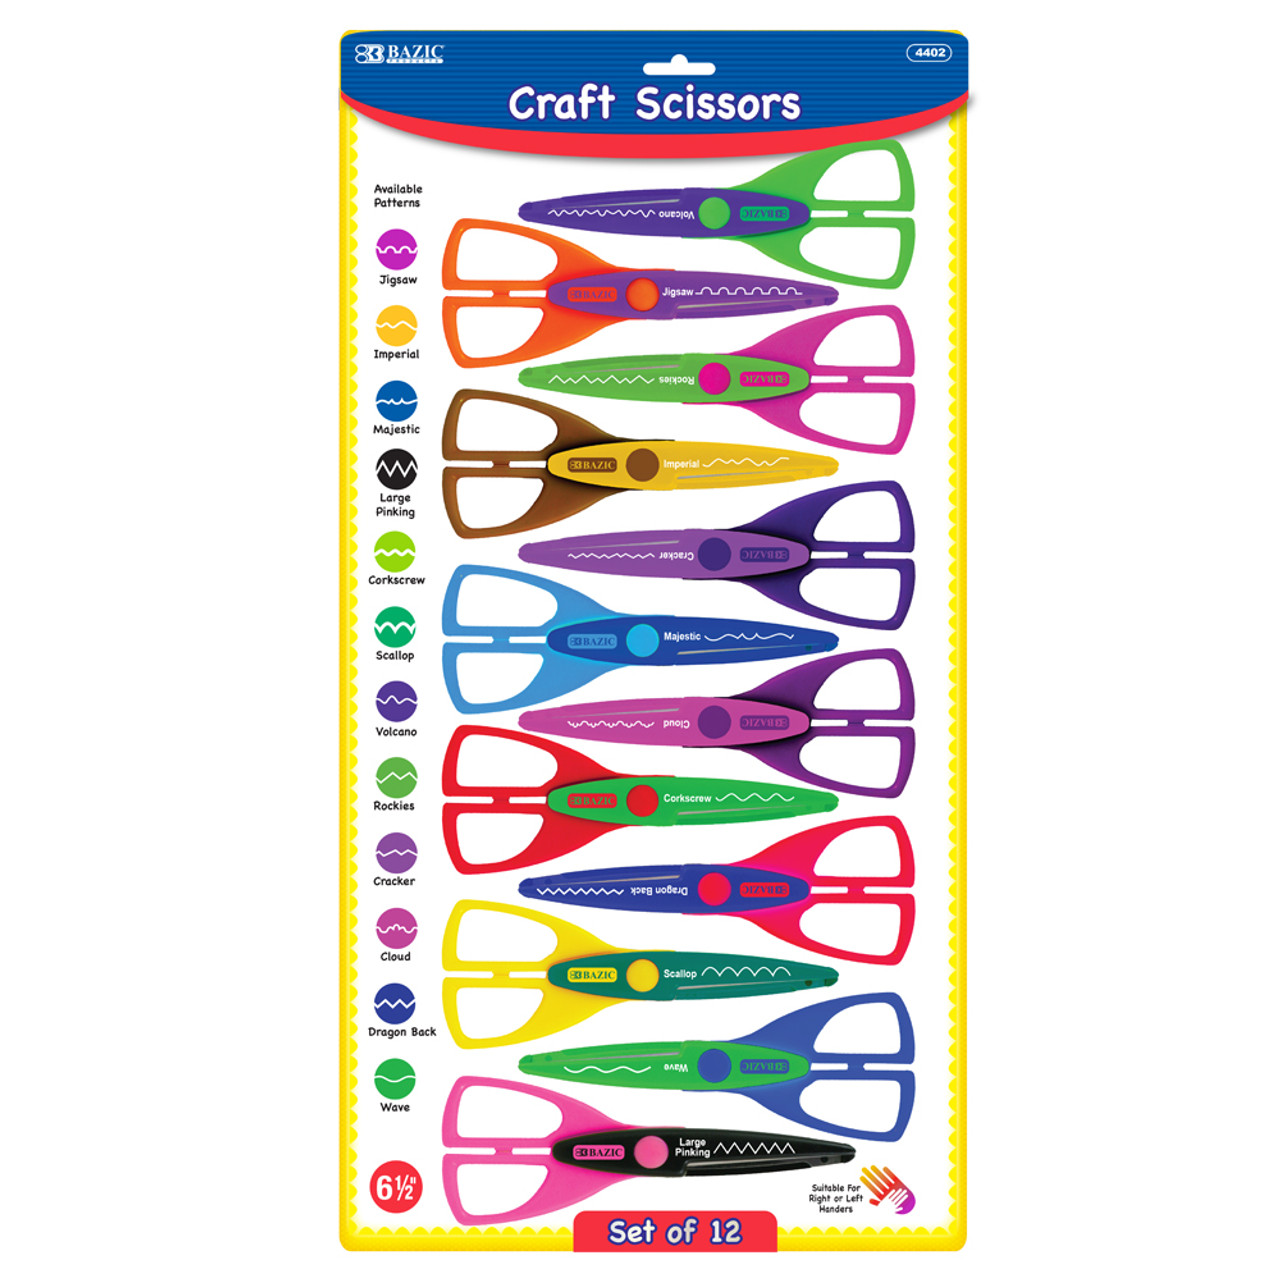 BAZIC 5 Blunt Tip School Scissors Bazic Products